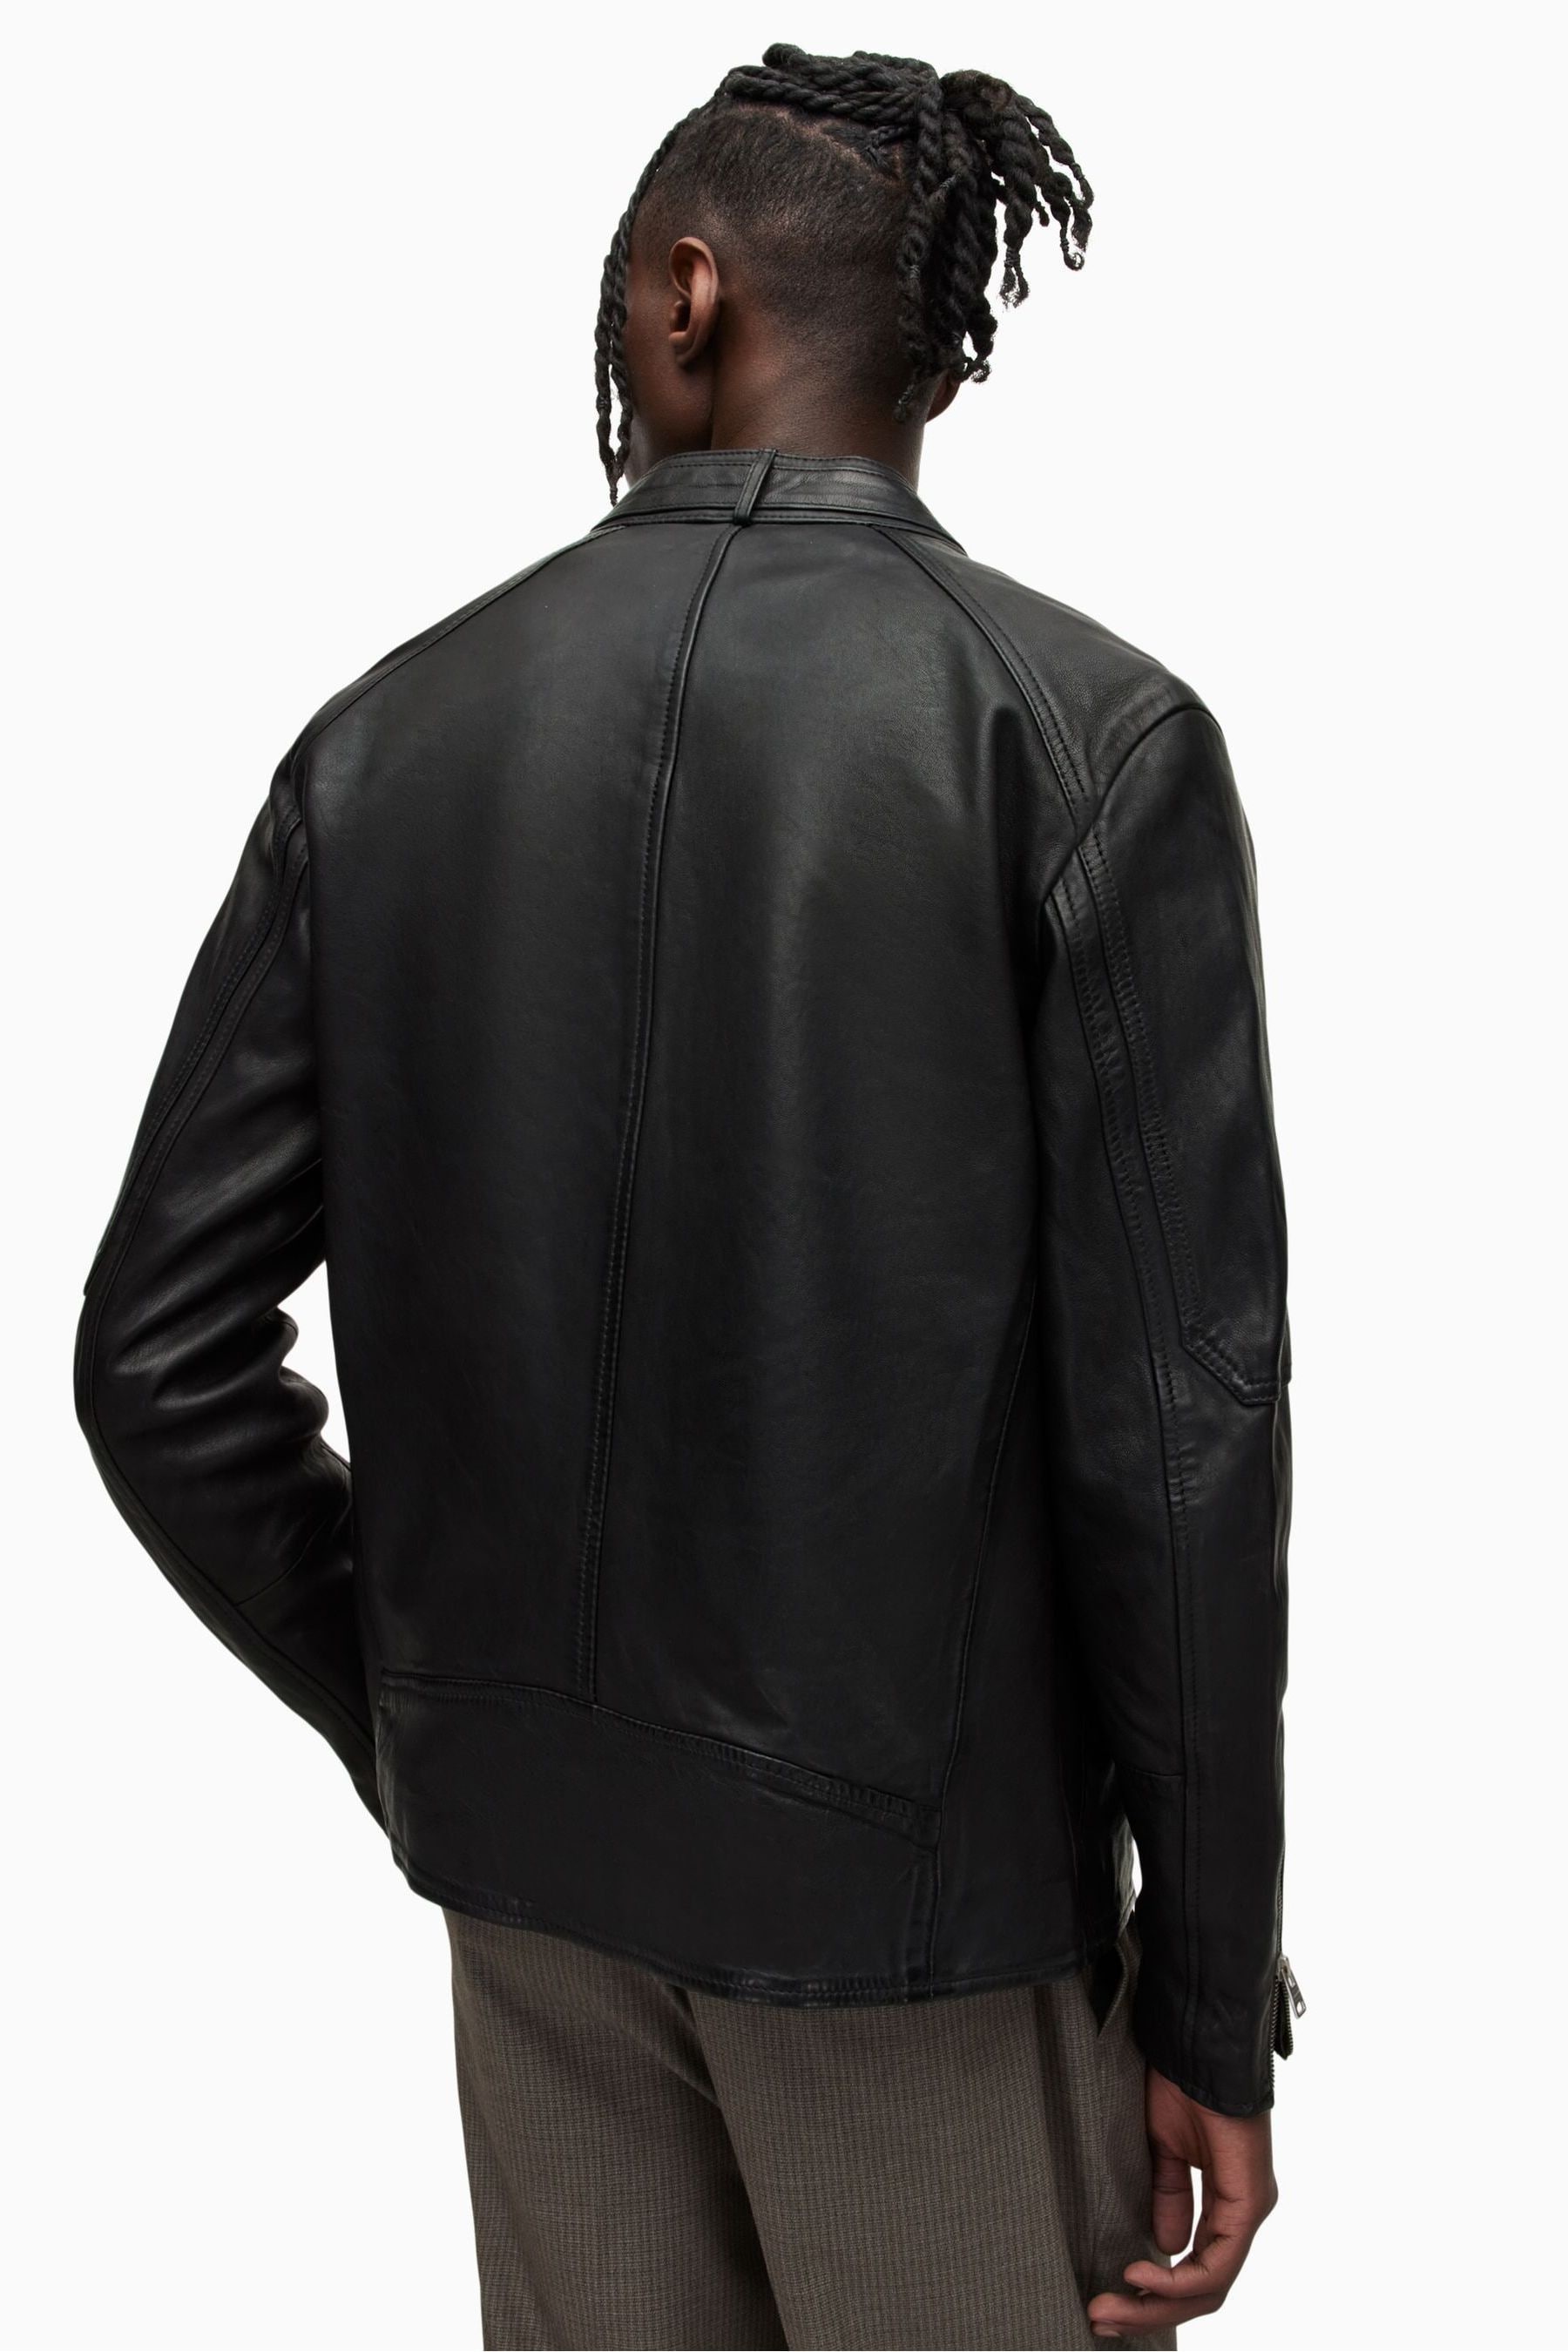 Buy AllSaints Cora Black Jacket from the Next UK online shop